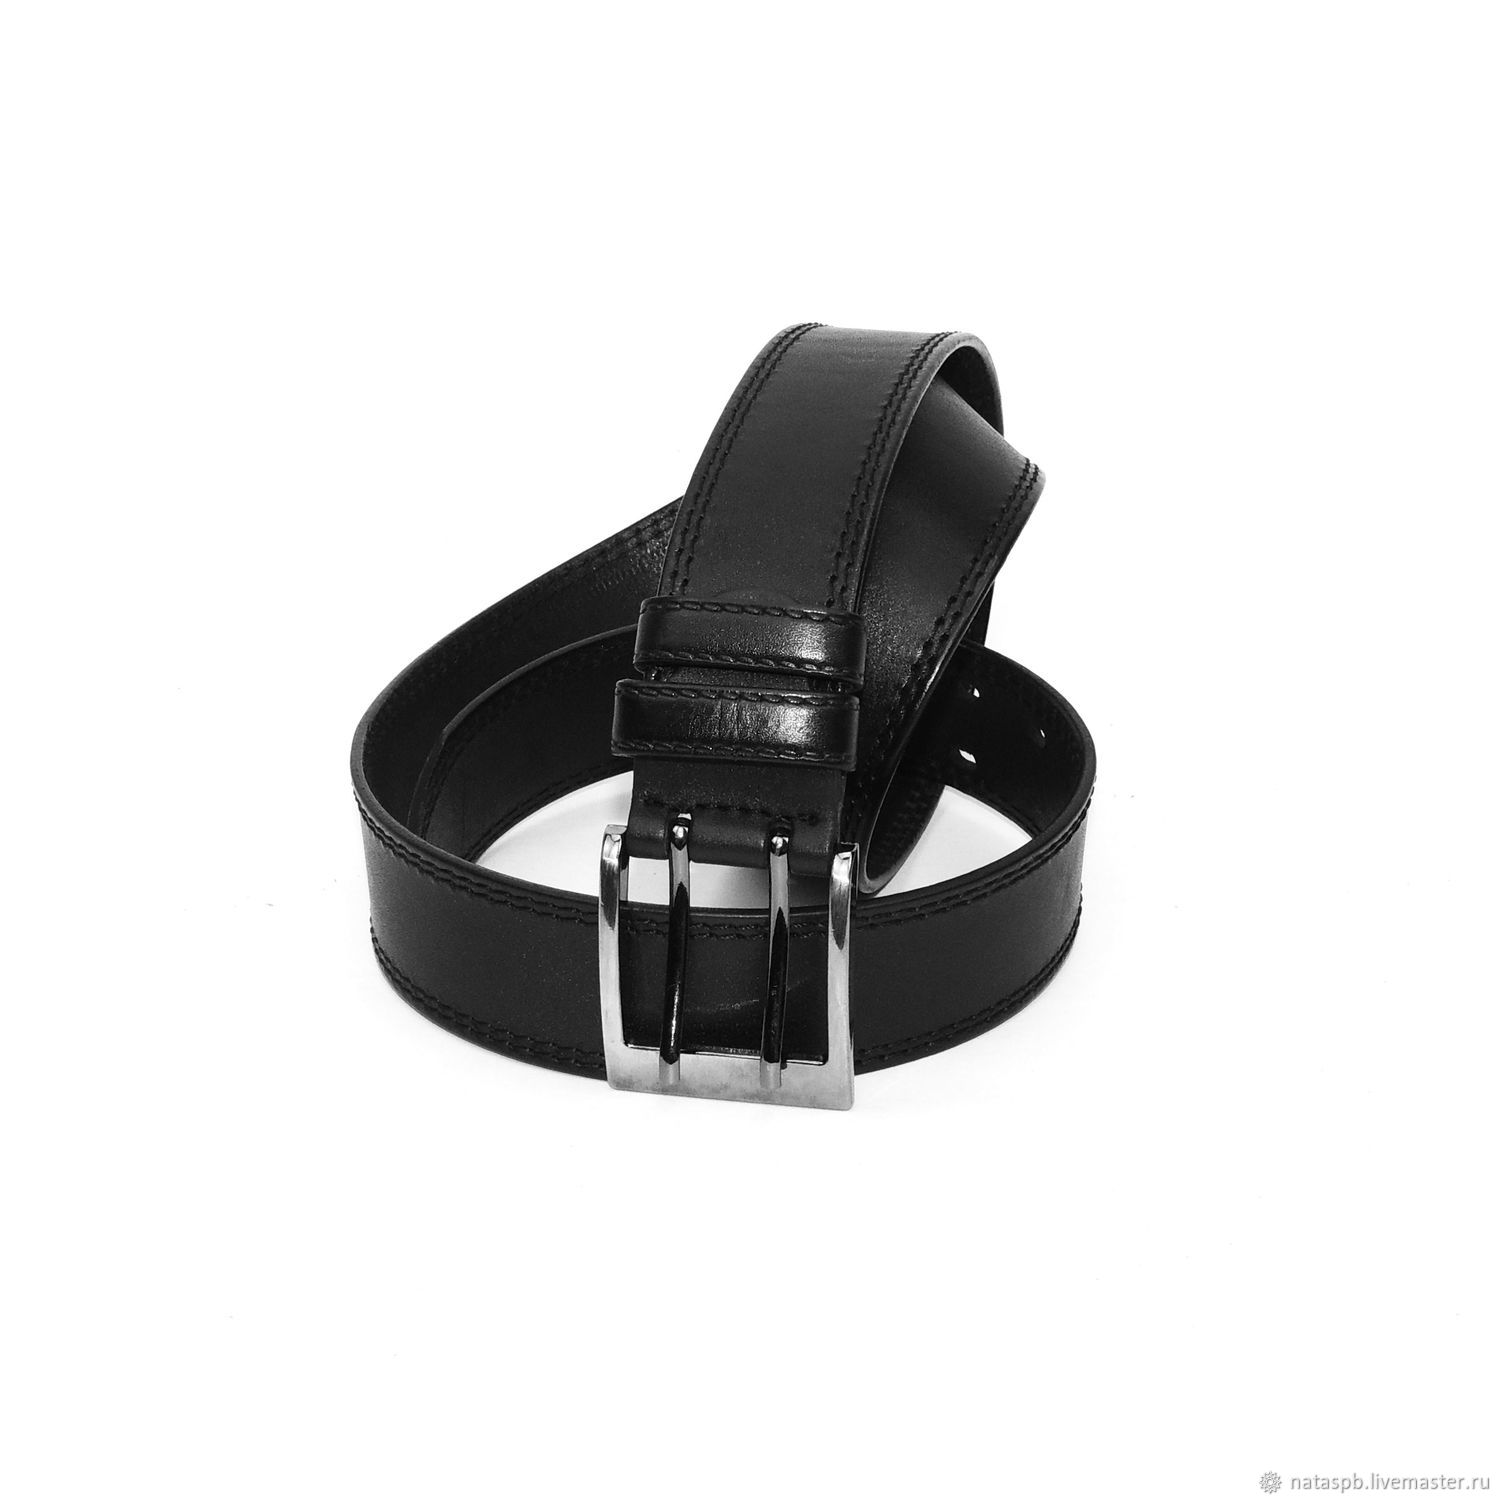  Men's leather belt black 40 mm wide, Straps, St. Petersburg,  Фото №1